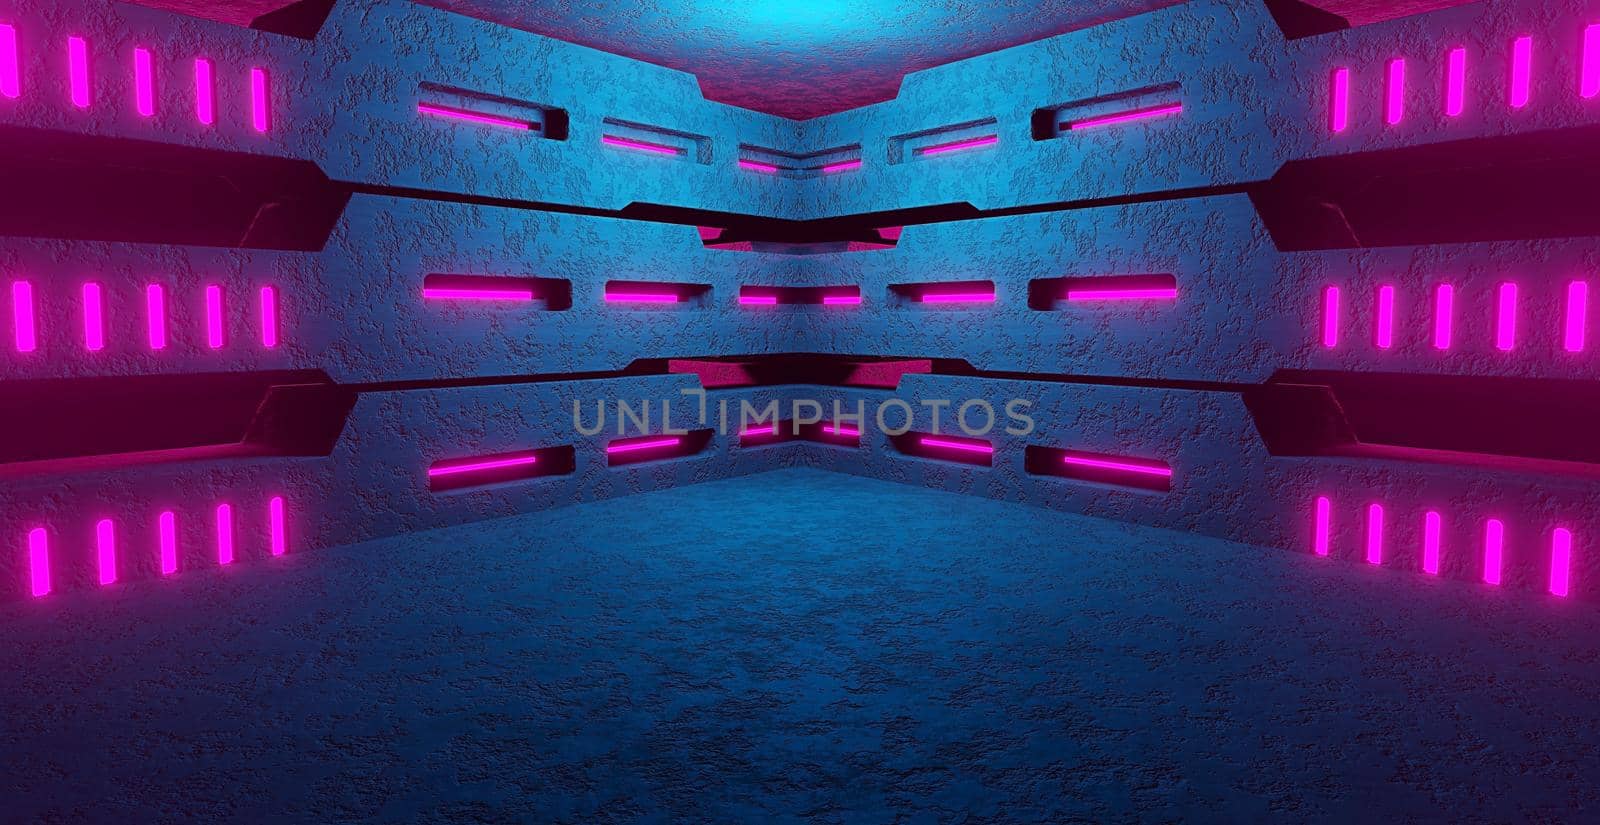 Futuristic Industrial Garage Underground Hangar Corridor Scene Spotlight Dark Purple Illustrative Banner Background Wallpaper Alien Concept 3D Illustration by yay_lmrb